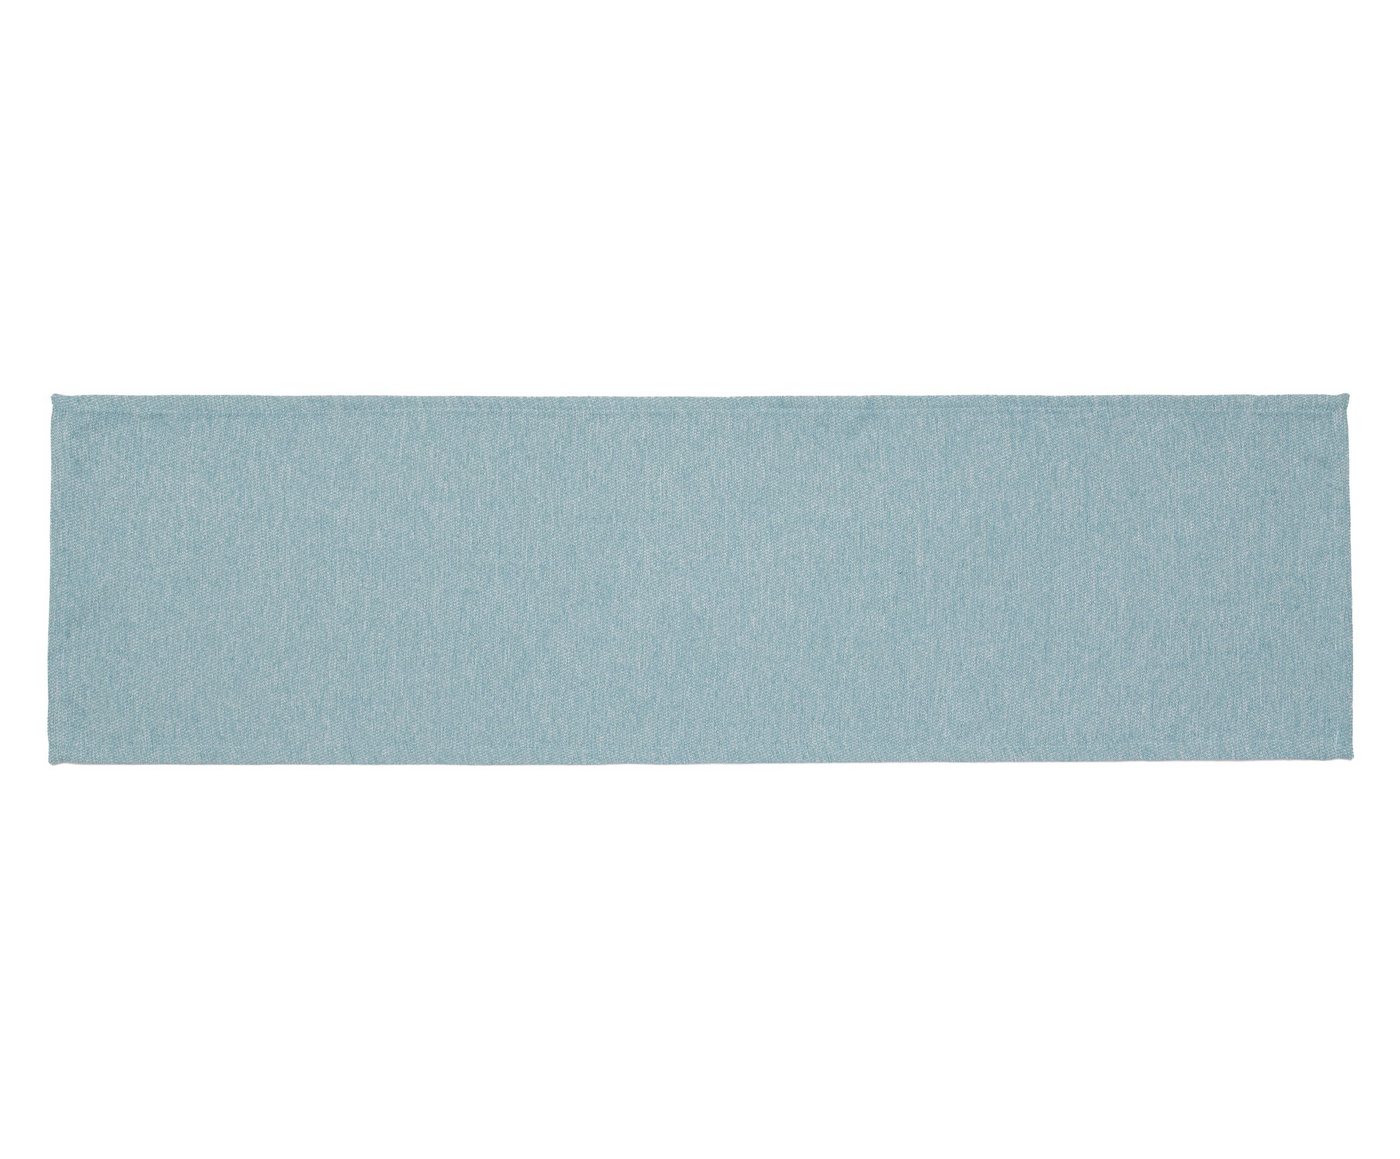 Gözze Tischläufer GÖZZE Tischläufer FABRICIO blau (LB 140x40 cm) LB 140x40 cm blau von Gözze